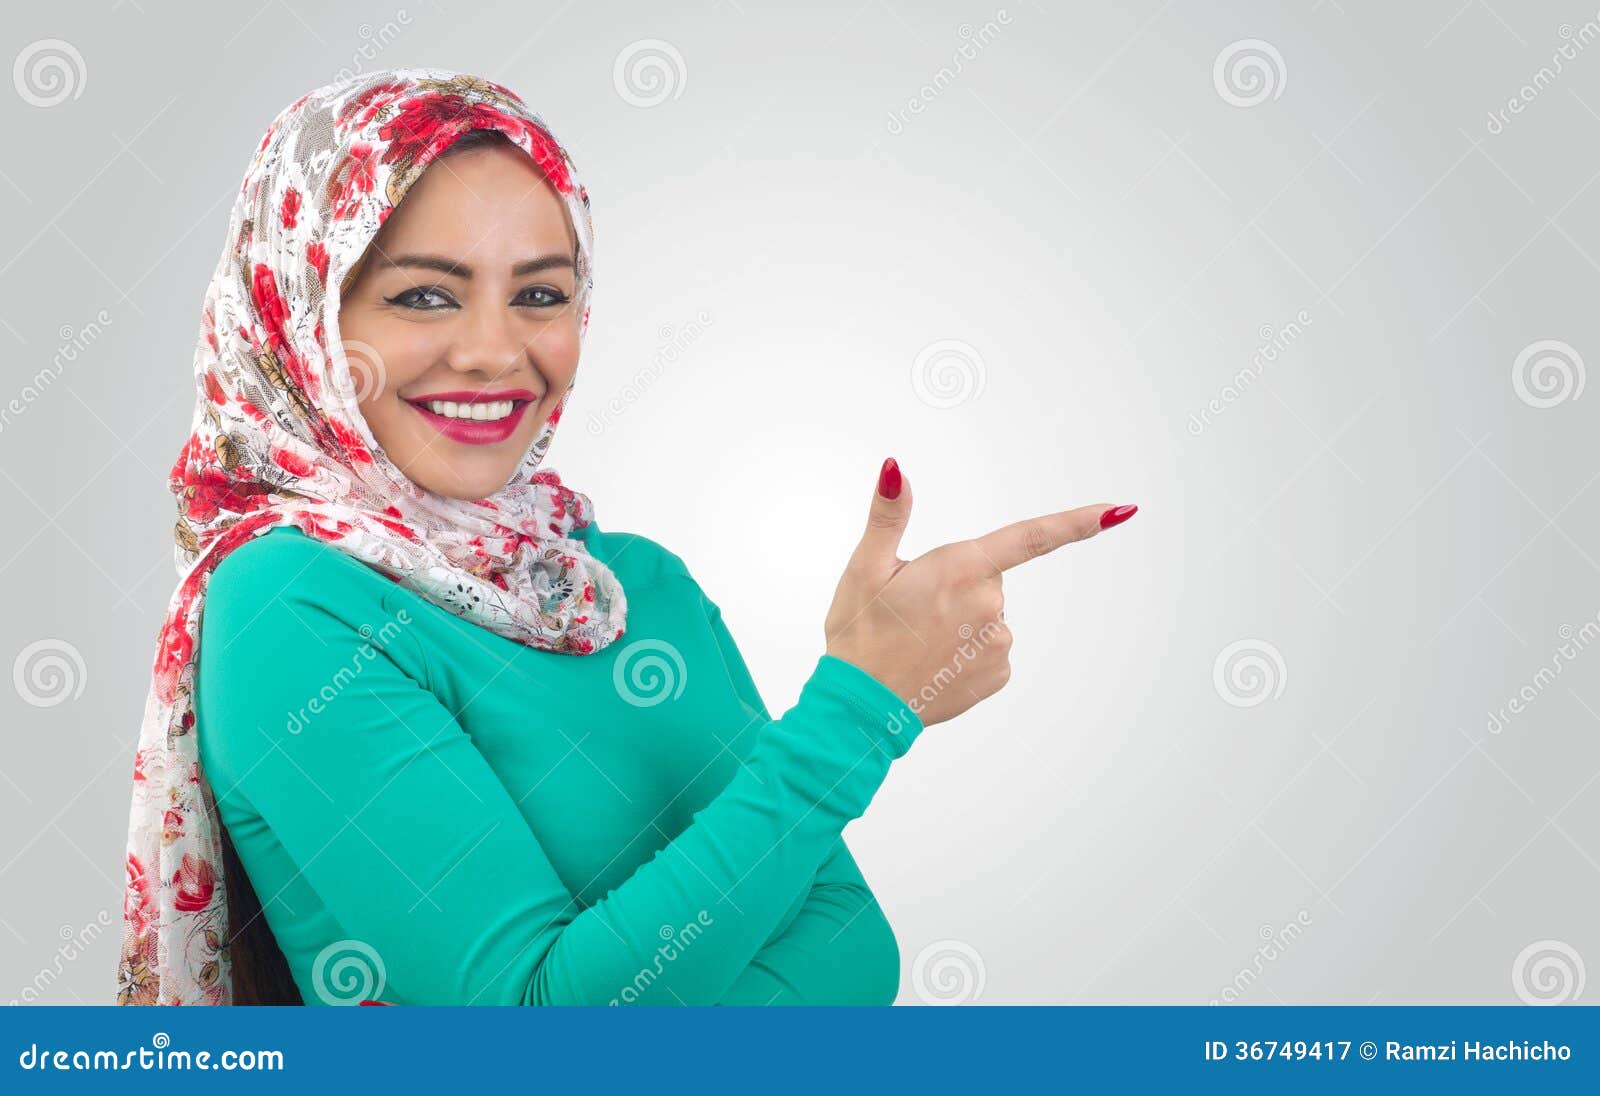 arabian woman holding car saudi, arabia, ksa, arabian, islam, charming, model, leisure, attractive, dhabi, qatar, presentation